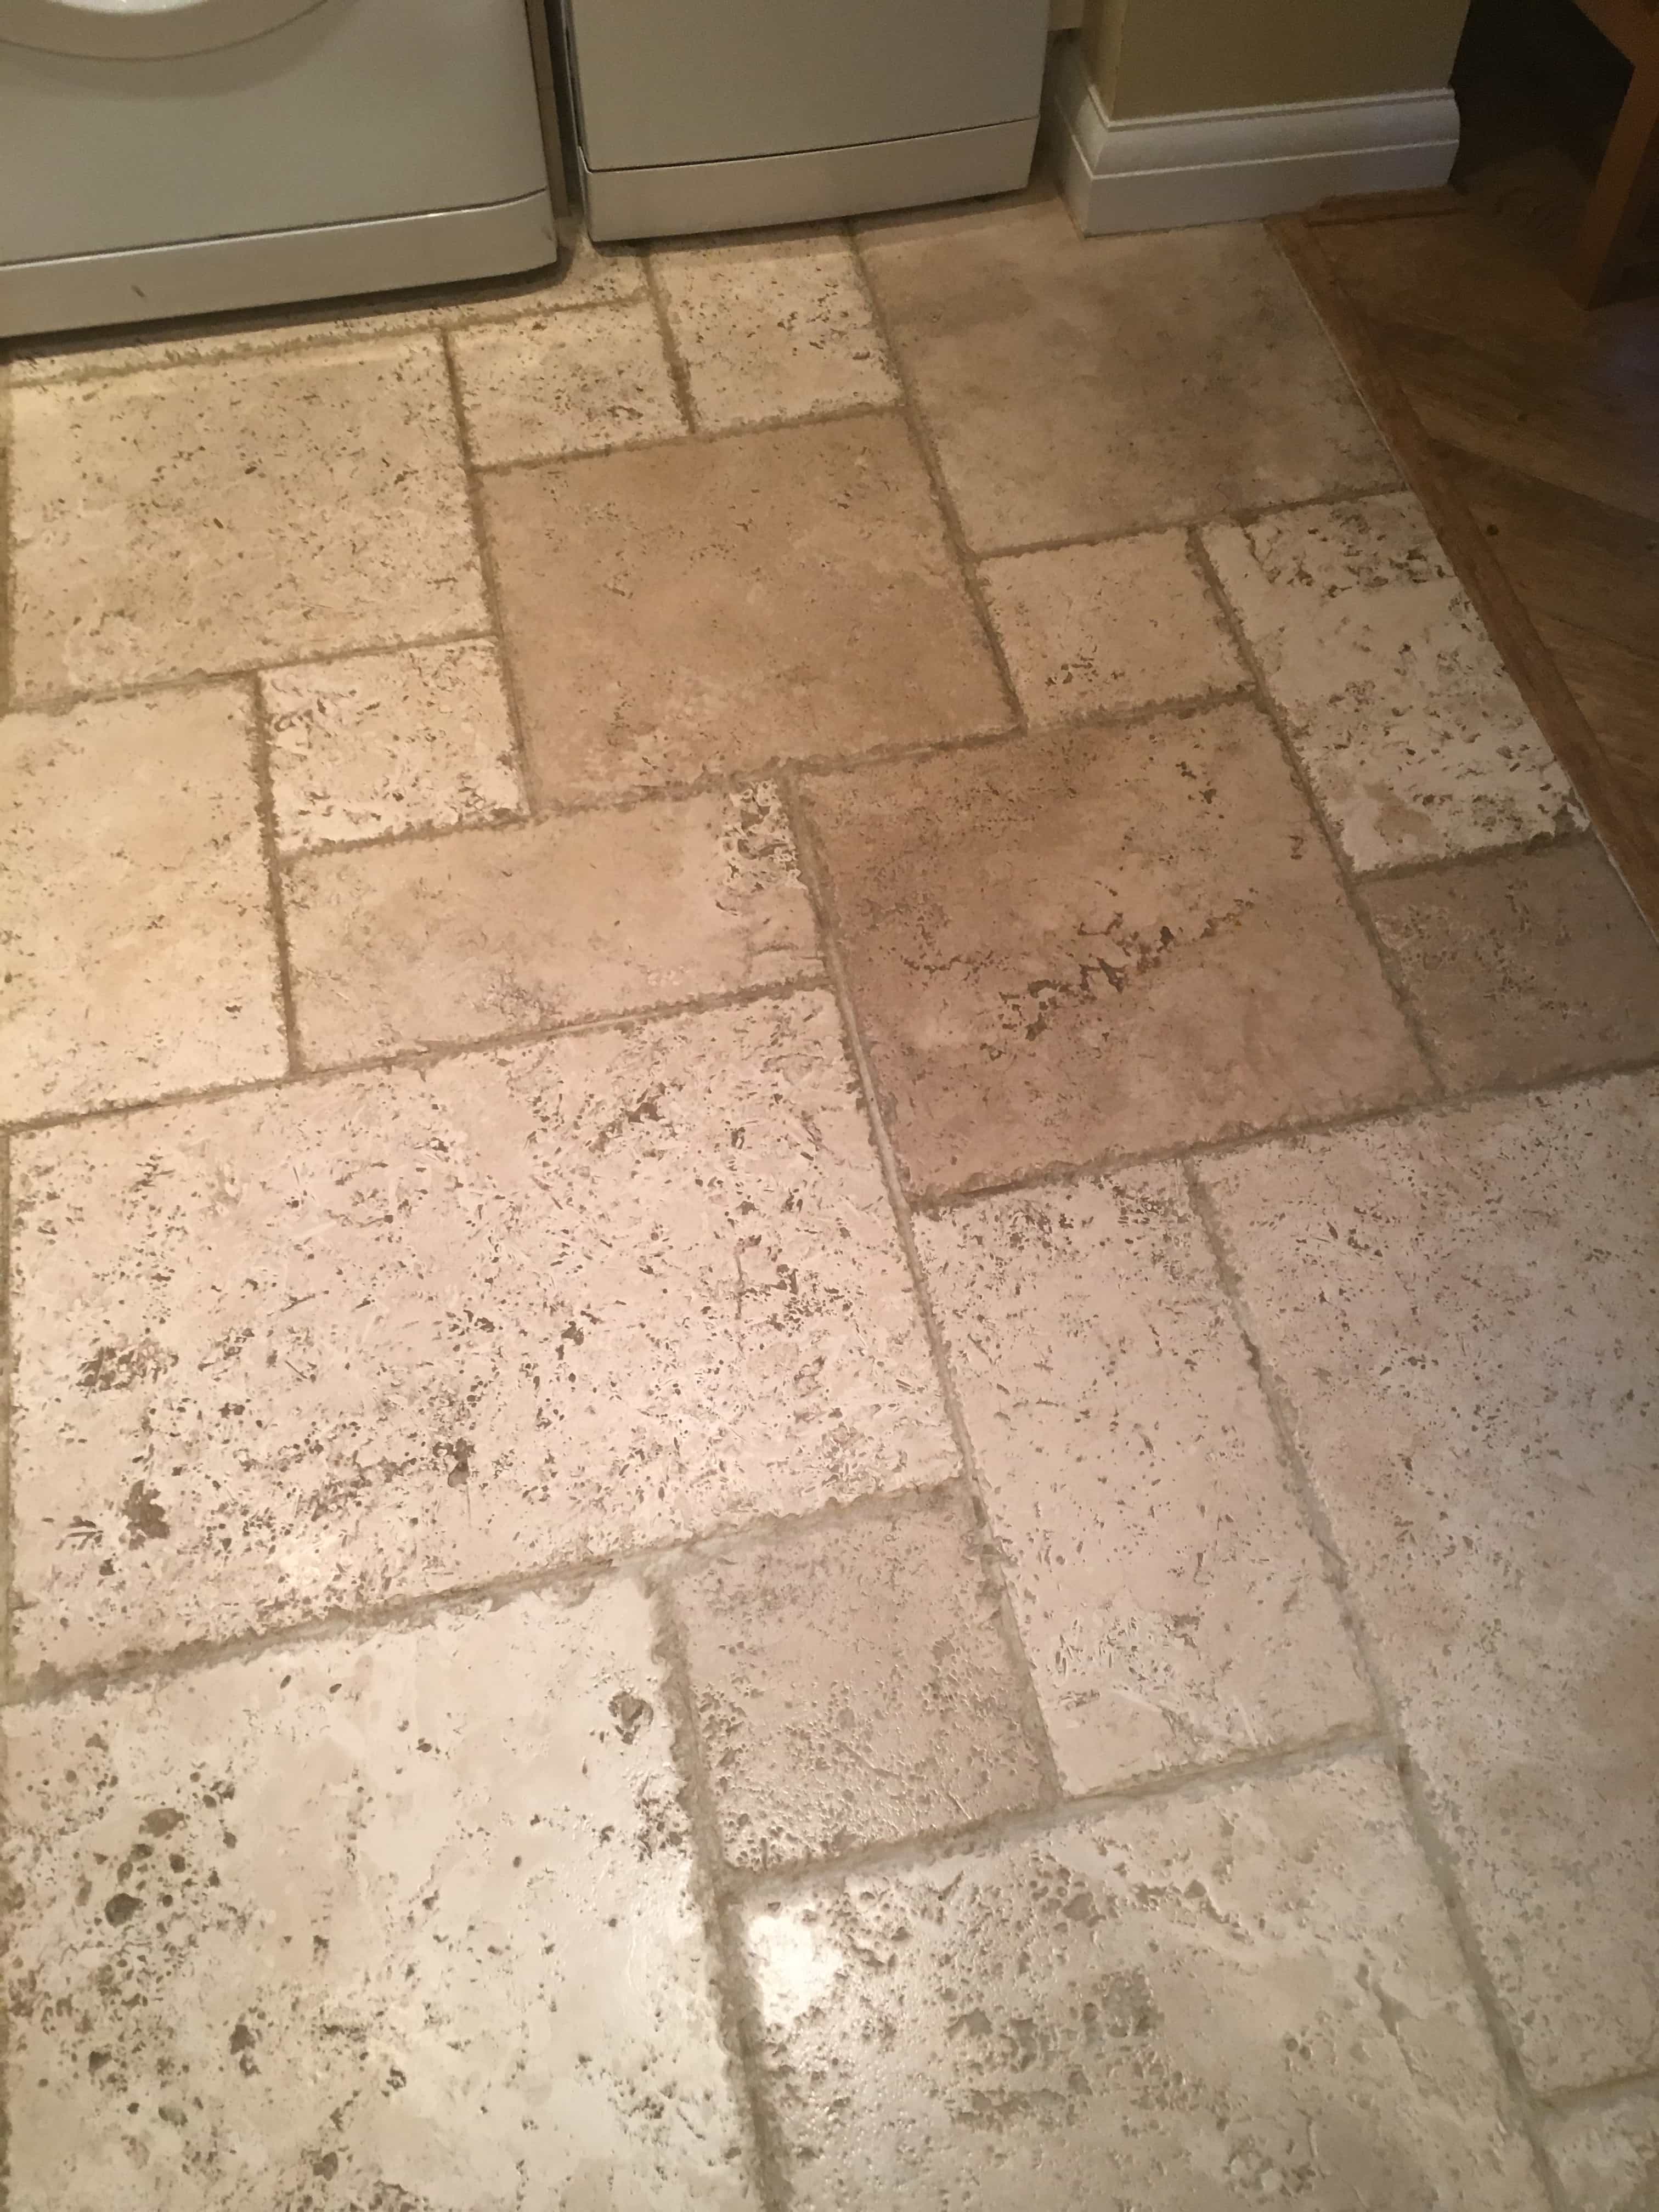 Tumbled Travertine Kitchen Floor Before Cleaning Godstone